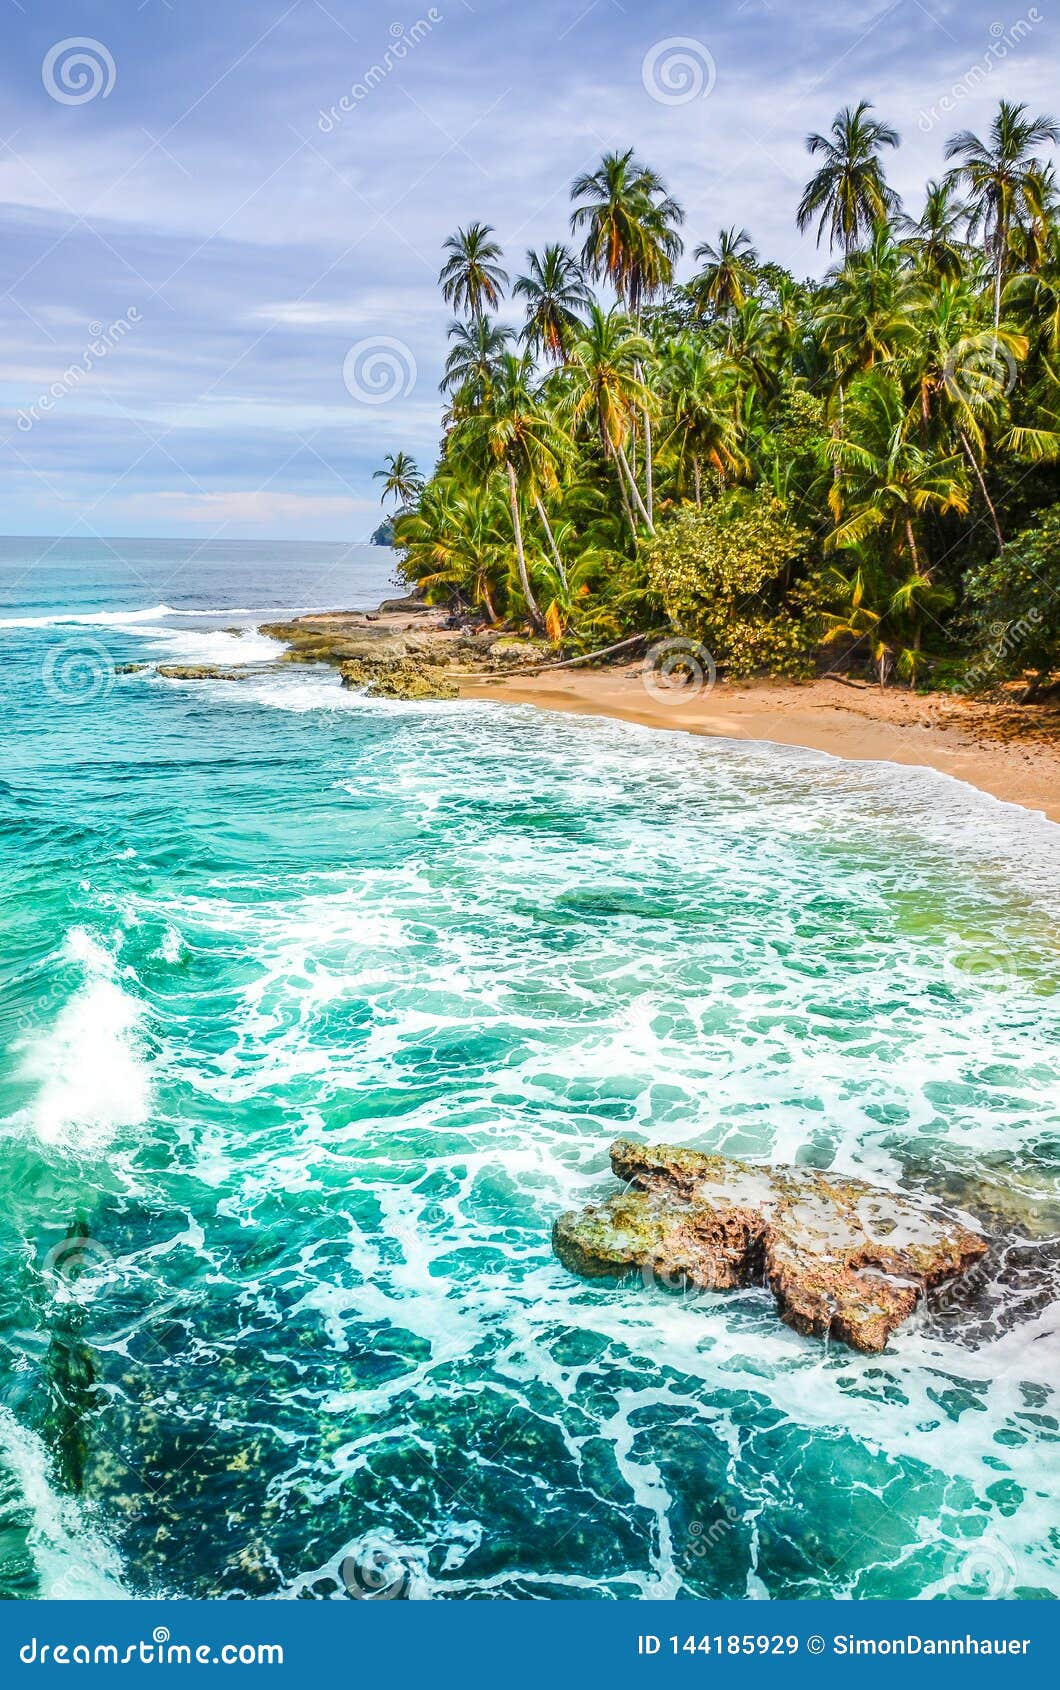 Wild Caribbean Beach of Costa Rica - Manzanillo Stock Image - Image of ...